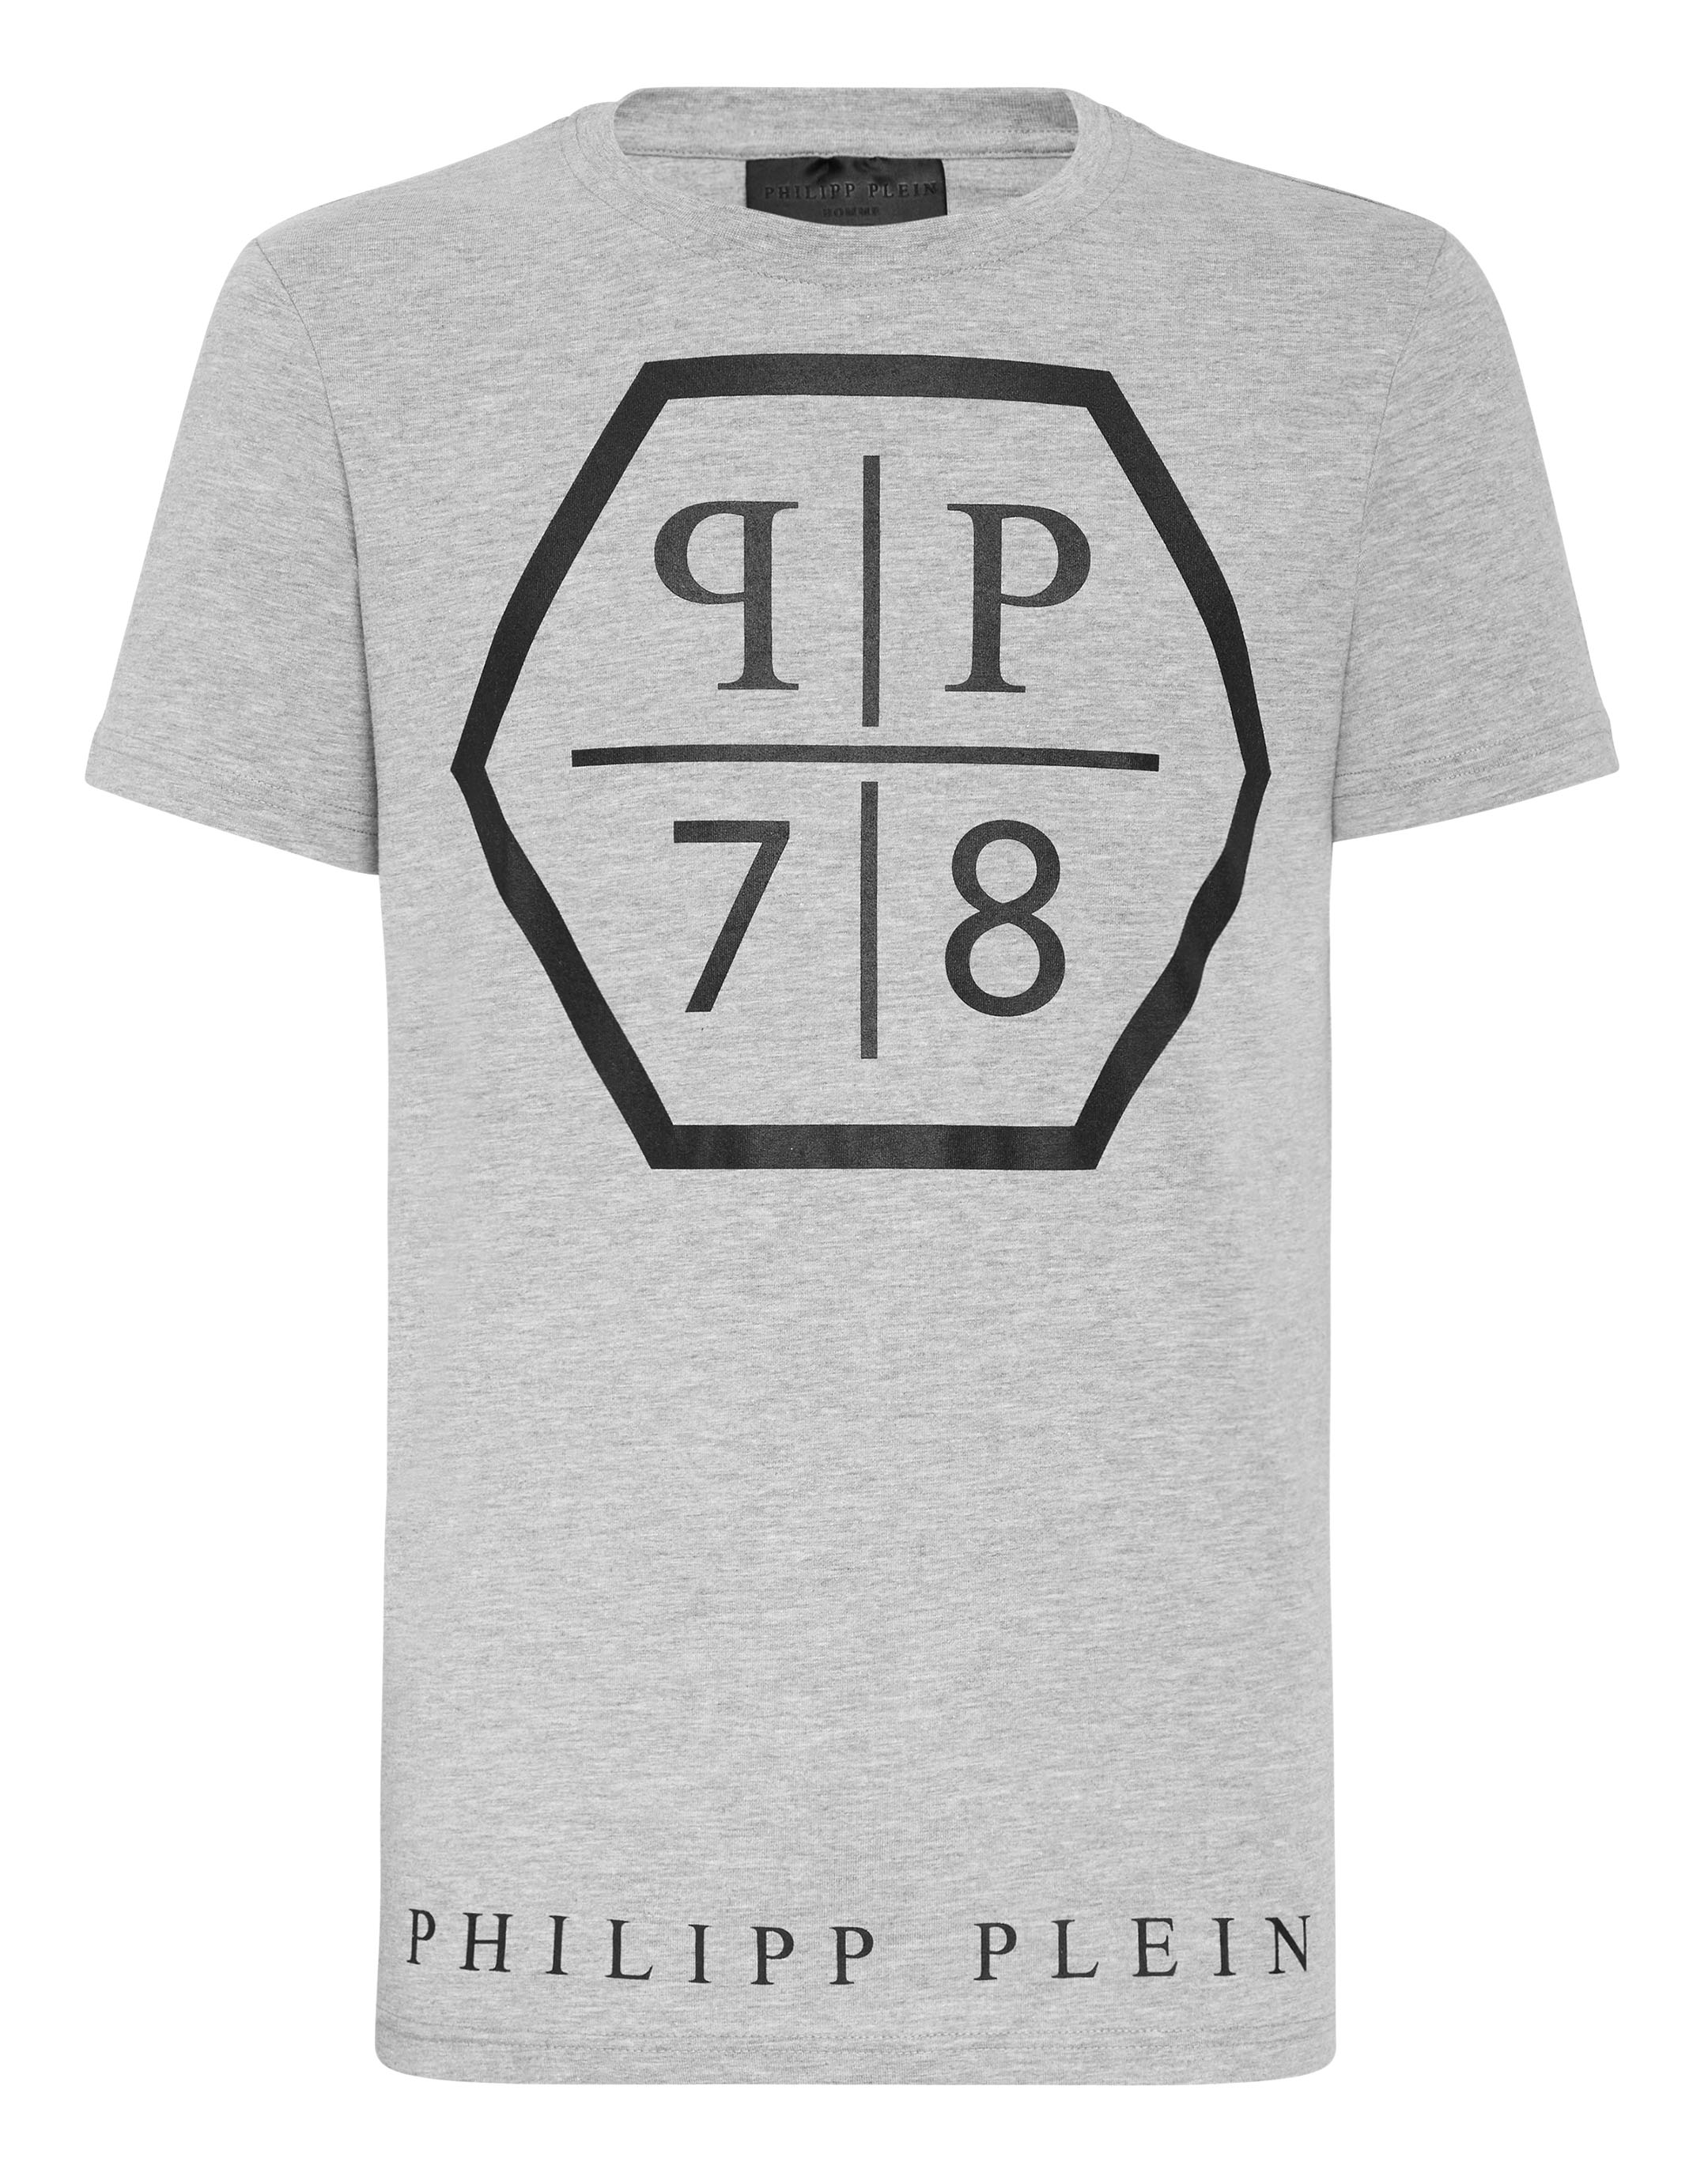 philipp plein grey t shirt